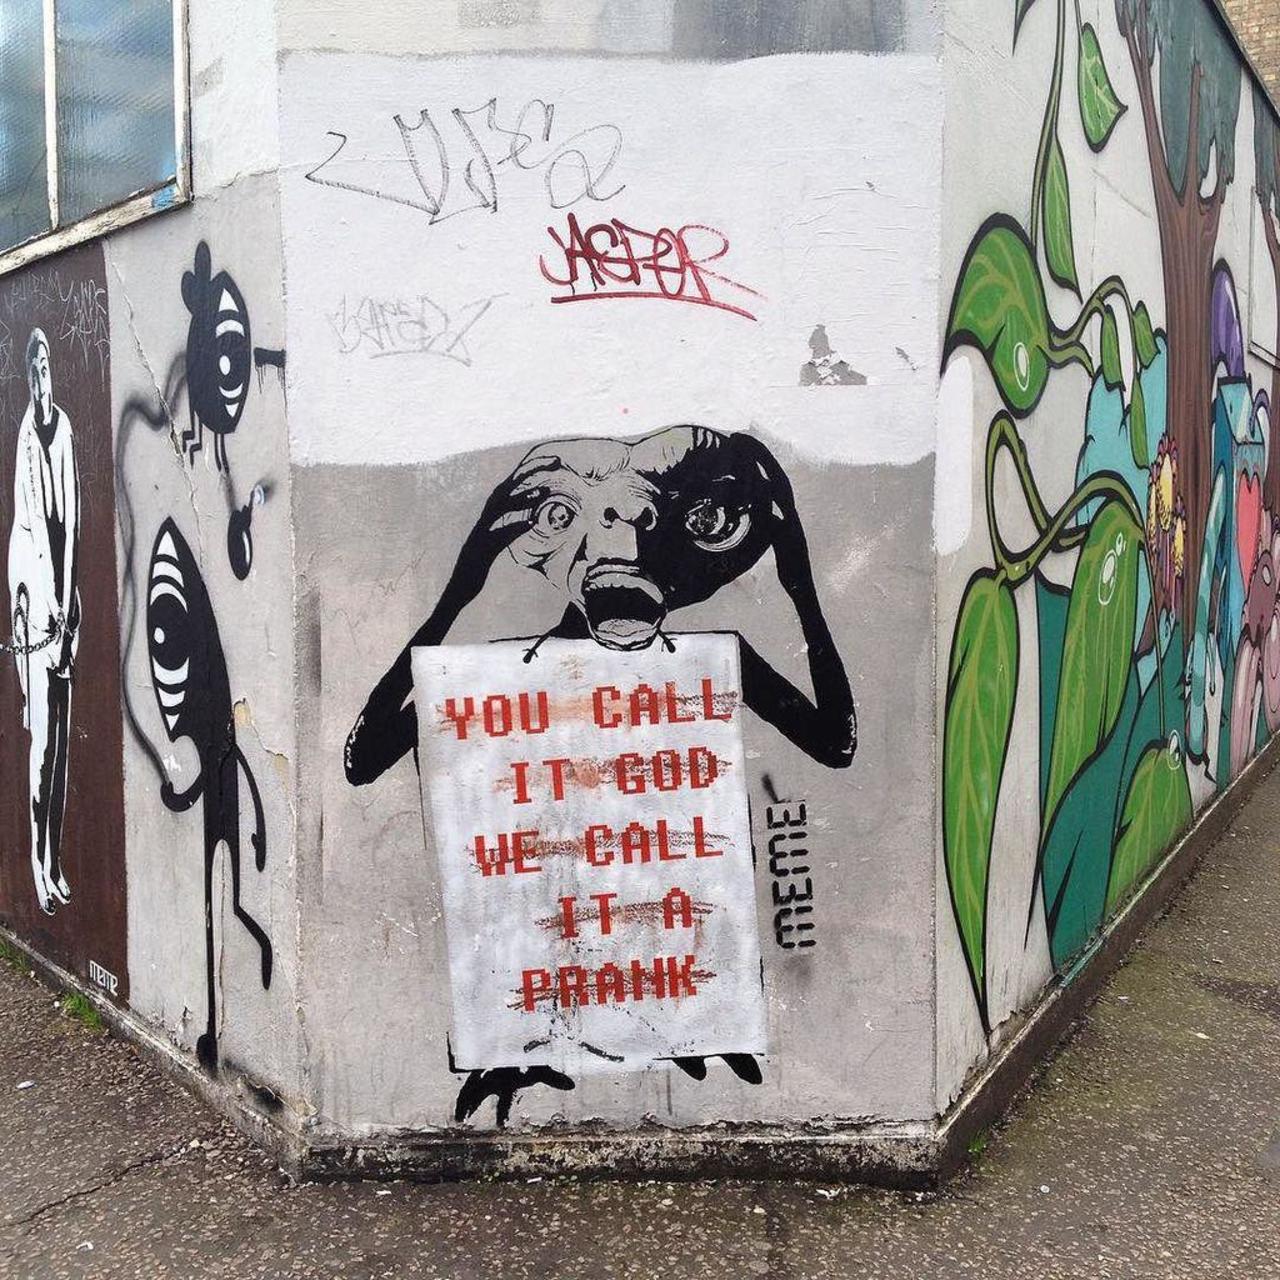 #streetart #graffiti #streetartlondon #london #thisislondon by isadarko http://t.co/koiFdS6Sd5